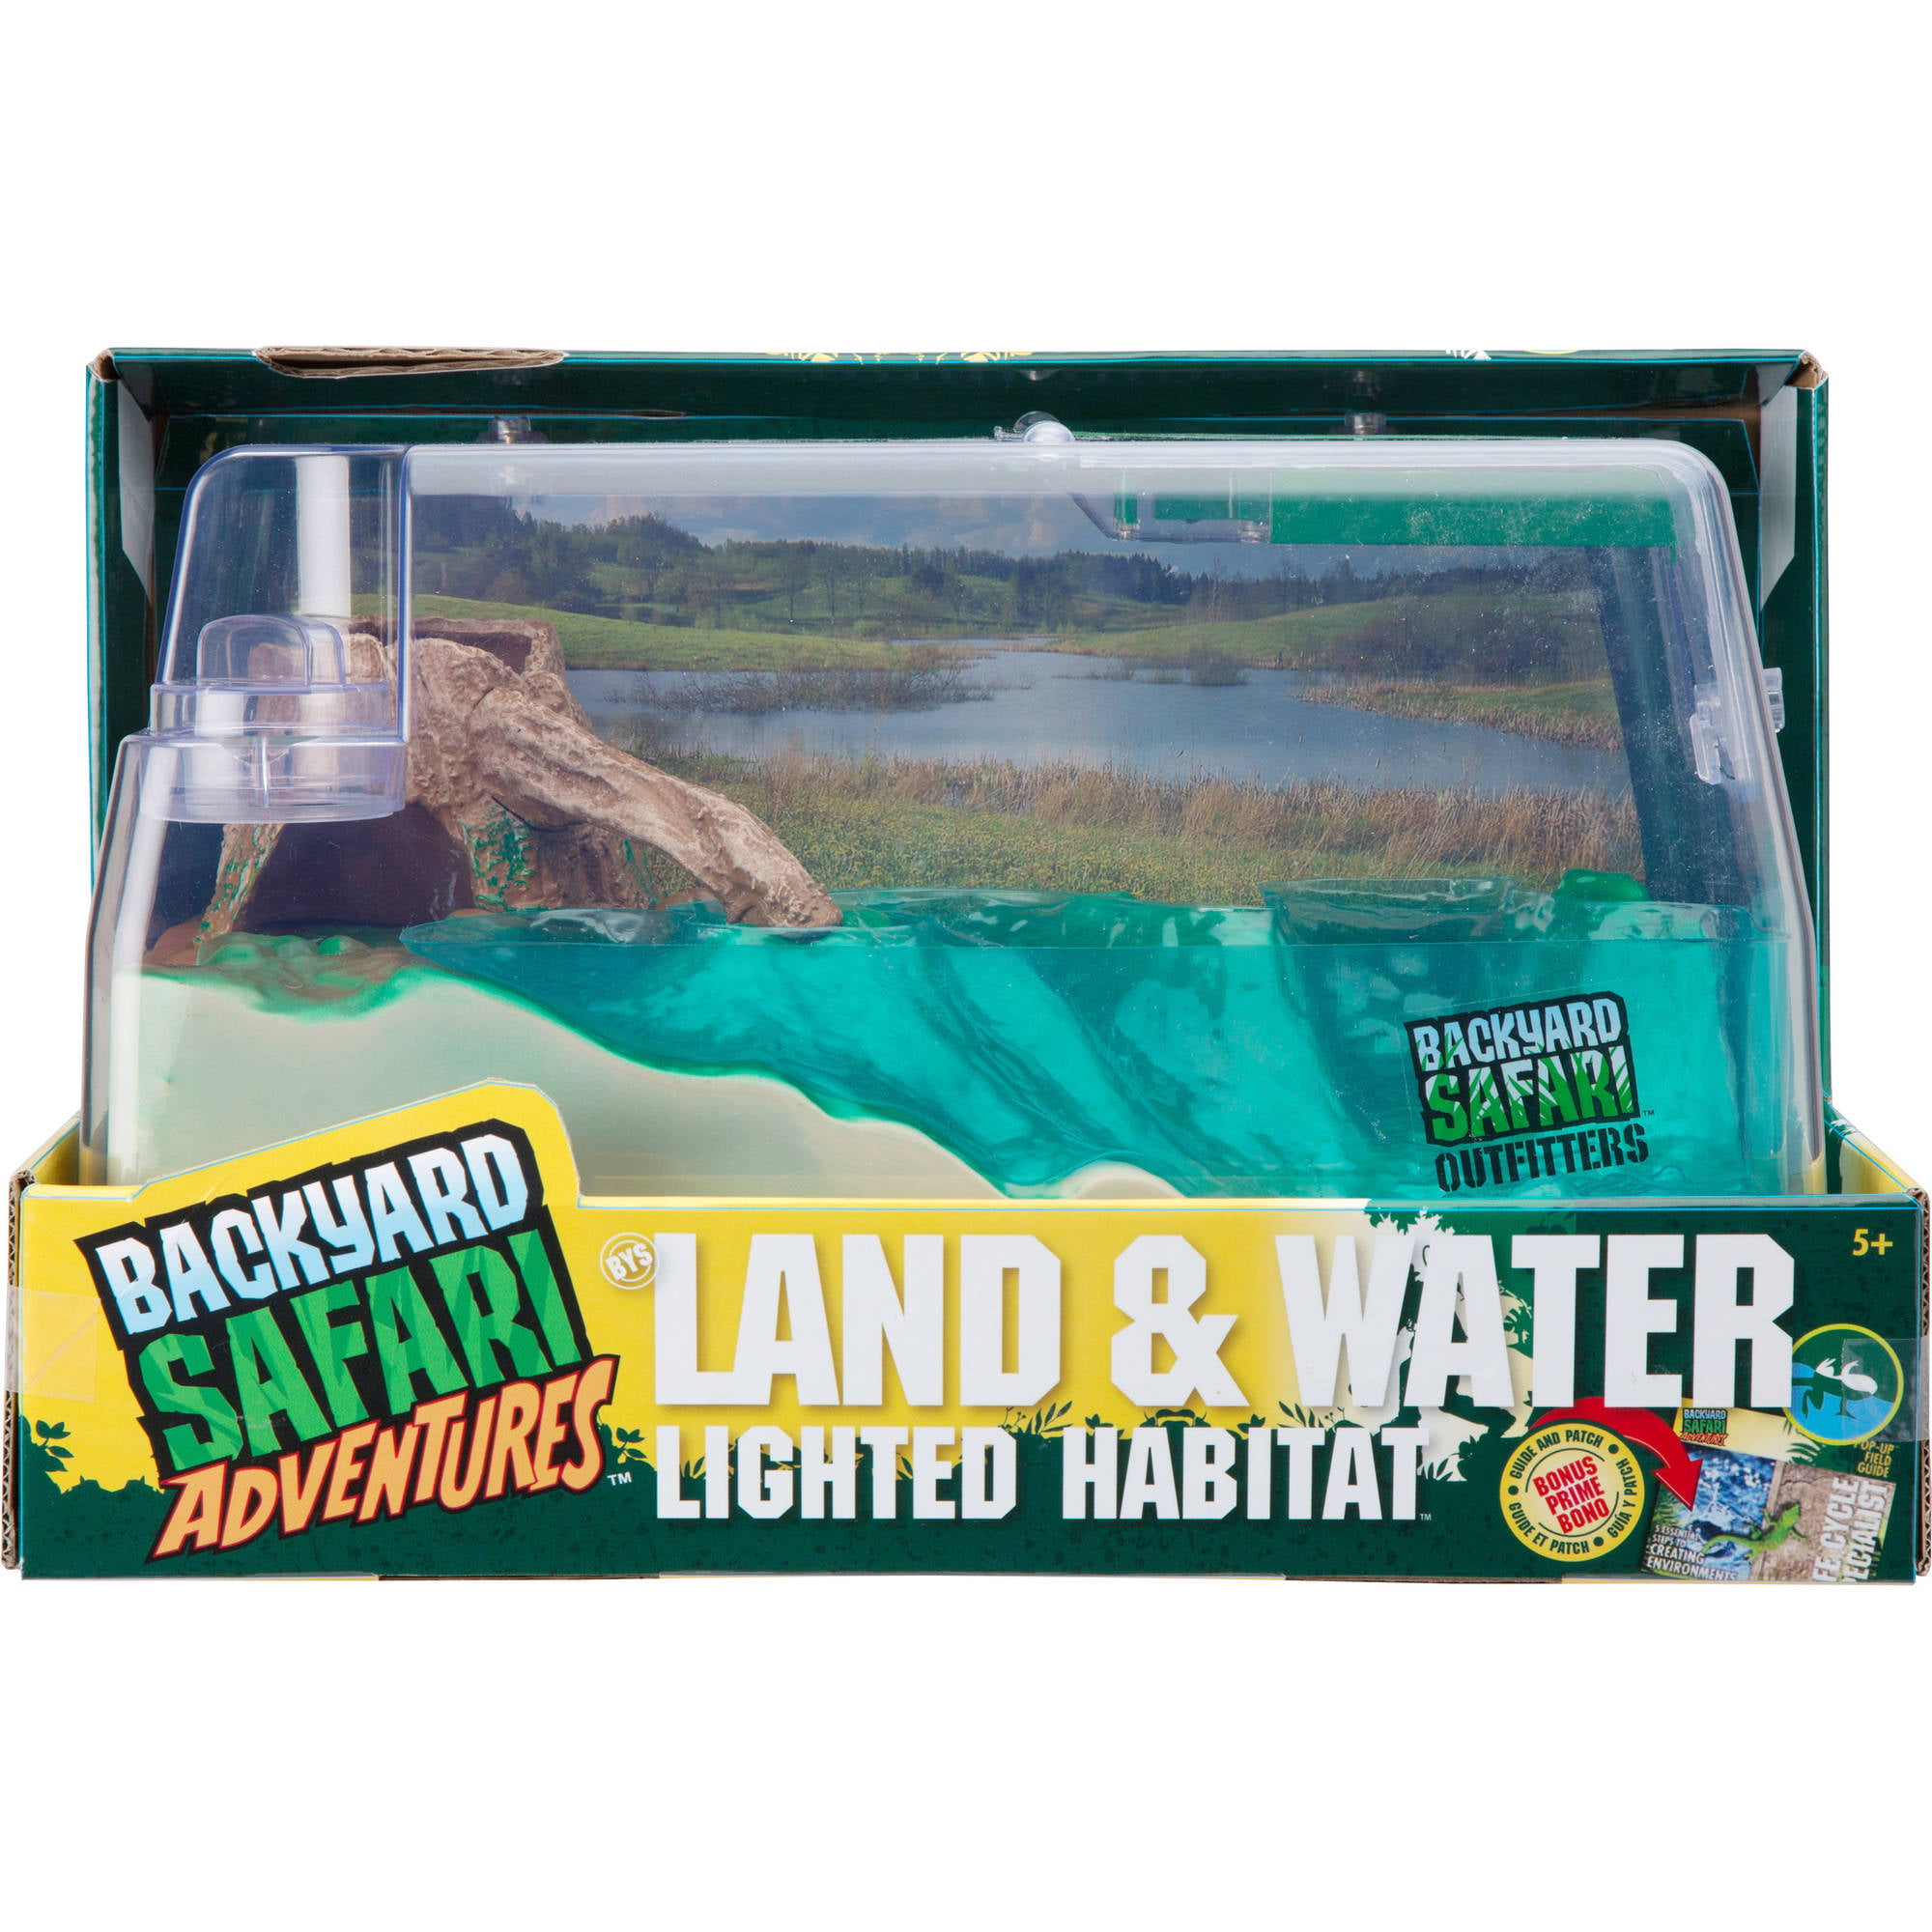 Backyard Safari Land And Water Lighted Habitat Walmartcom Walmartcom